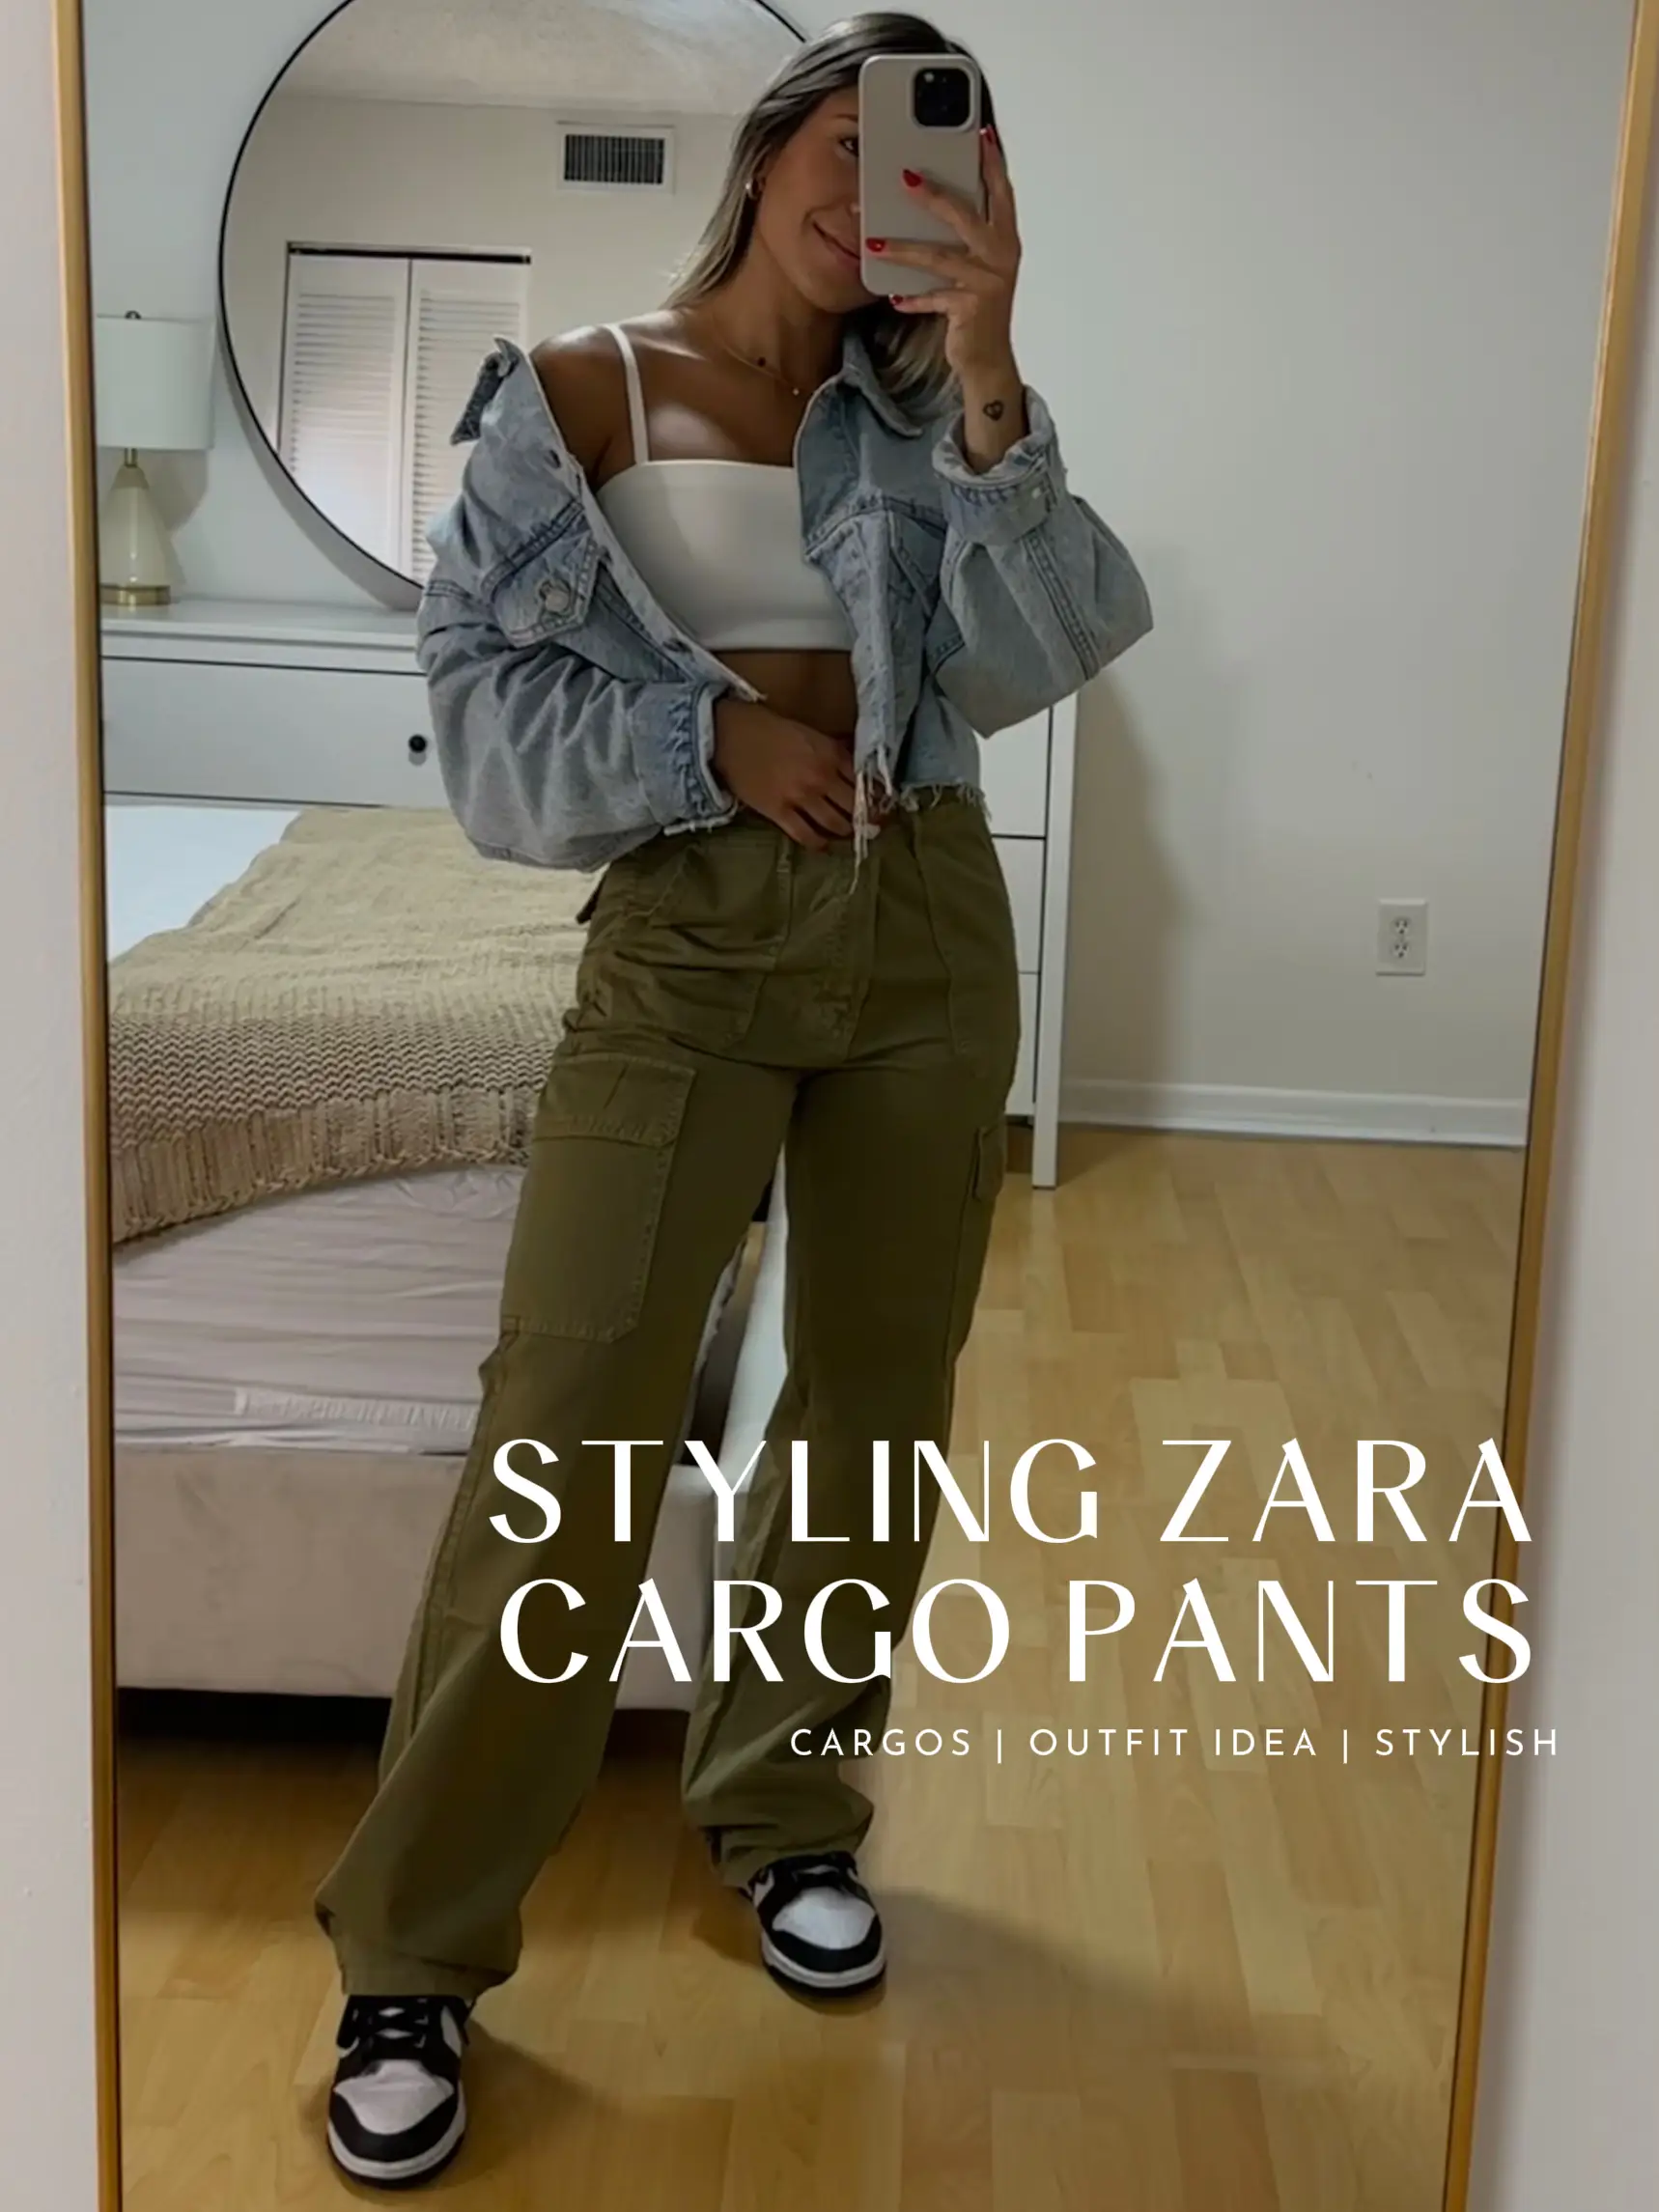 Outfit details: Pants- Zara • Tank- husband's 😅 • Shoes- Fila